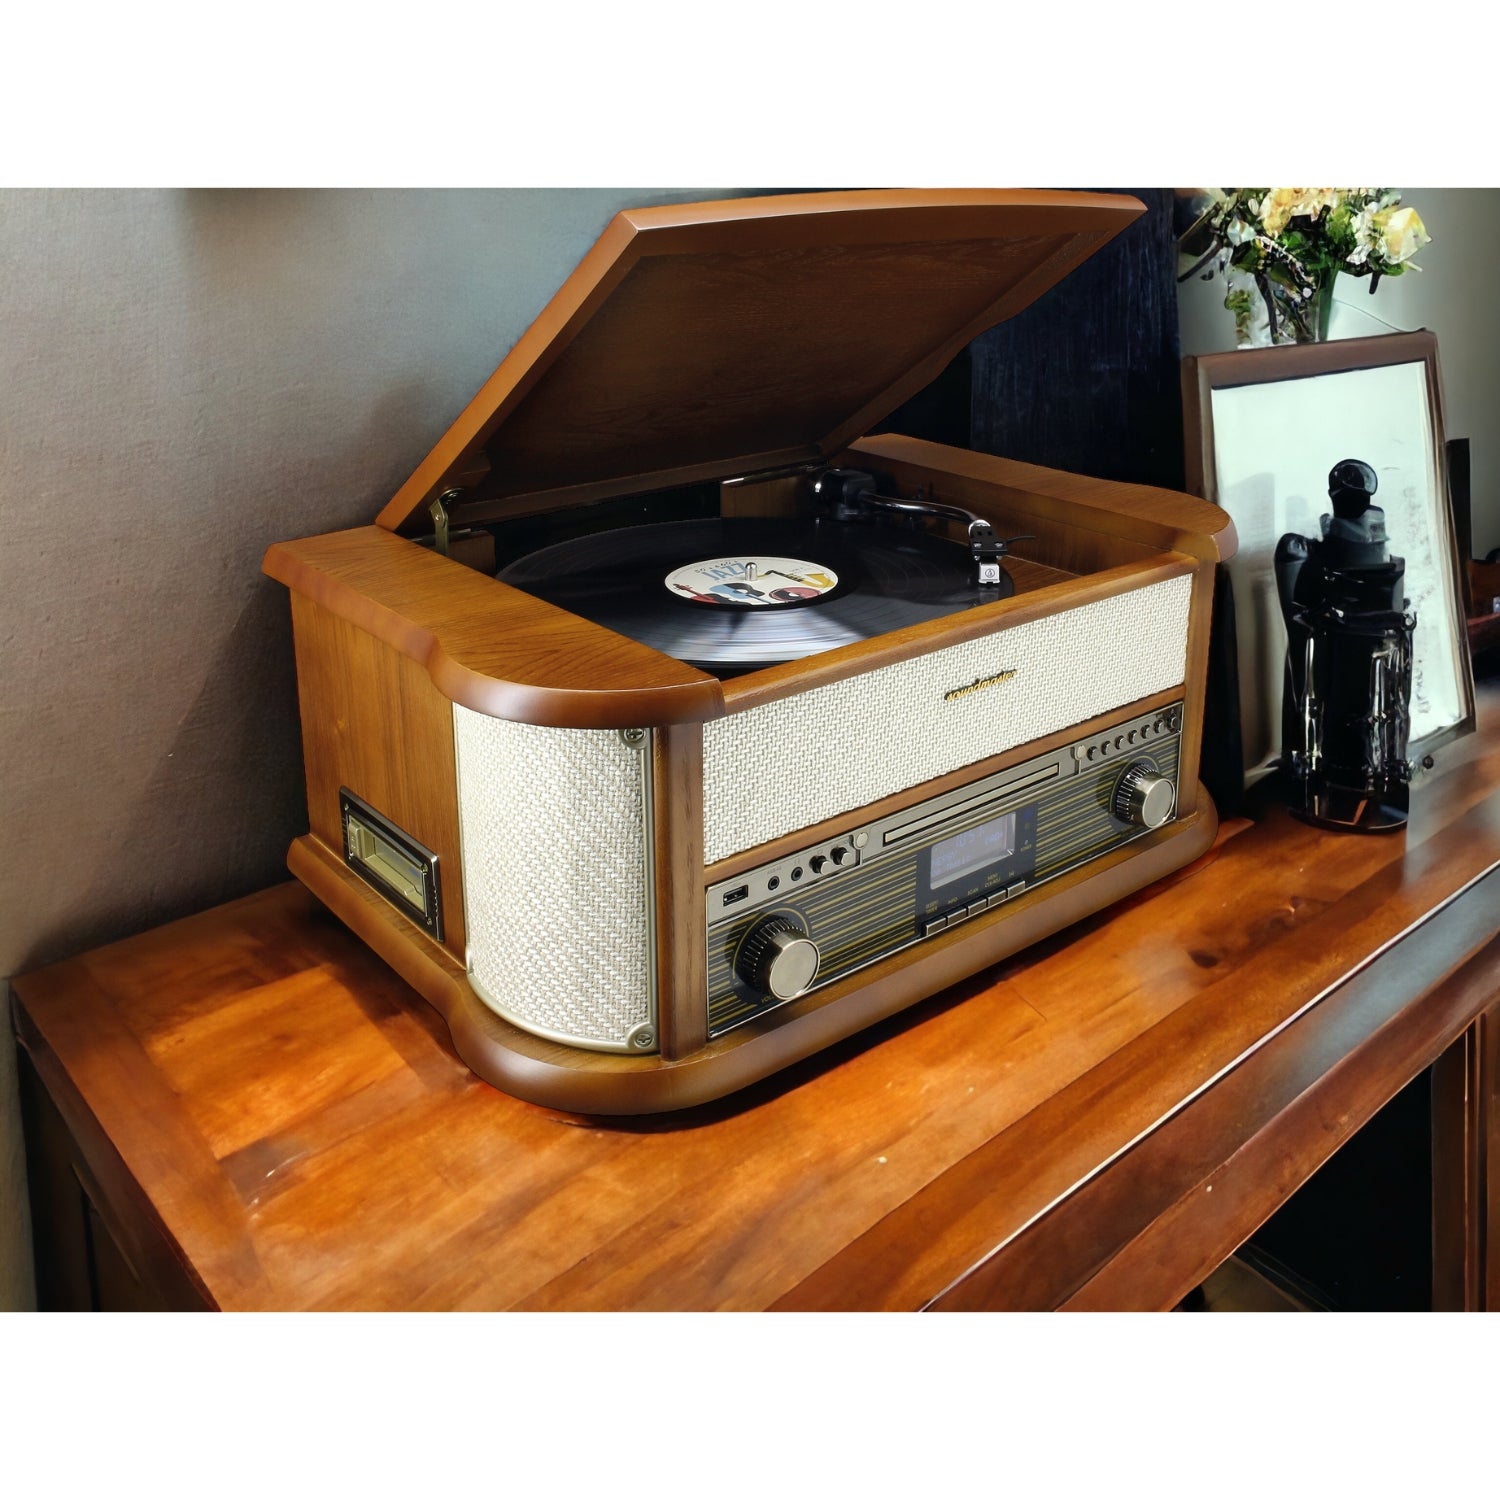 Soundmaster NR566BE 7-in-1 Nostalgie Stereoanlage mit Plattenspieler Audio Technica Magnettonabnehmer | Digitalradio DAB+ | CD-MP3 | USB | Kassette | Bluetooth | Digitalisierungs-Funktion | Equalizer